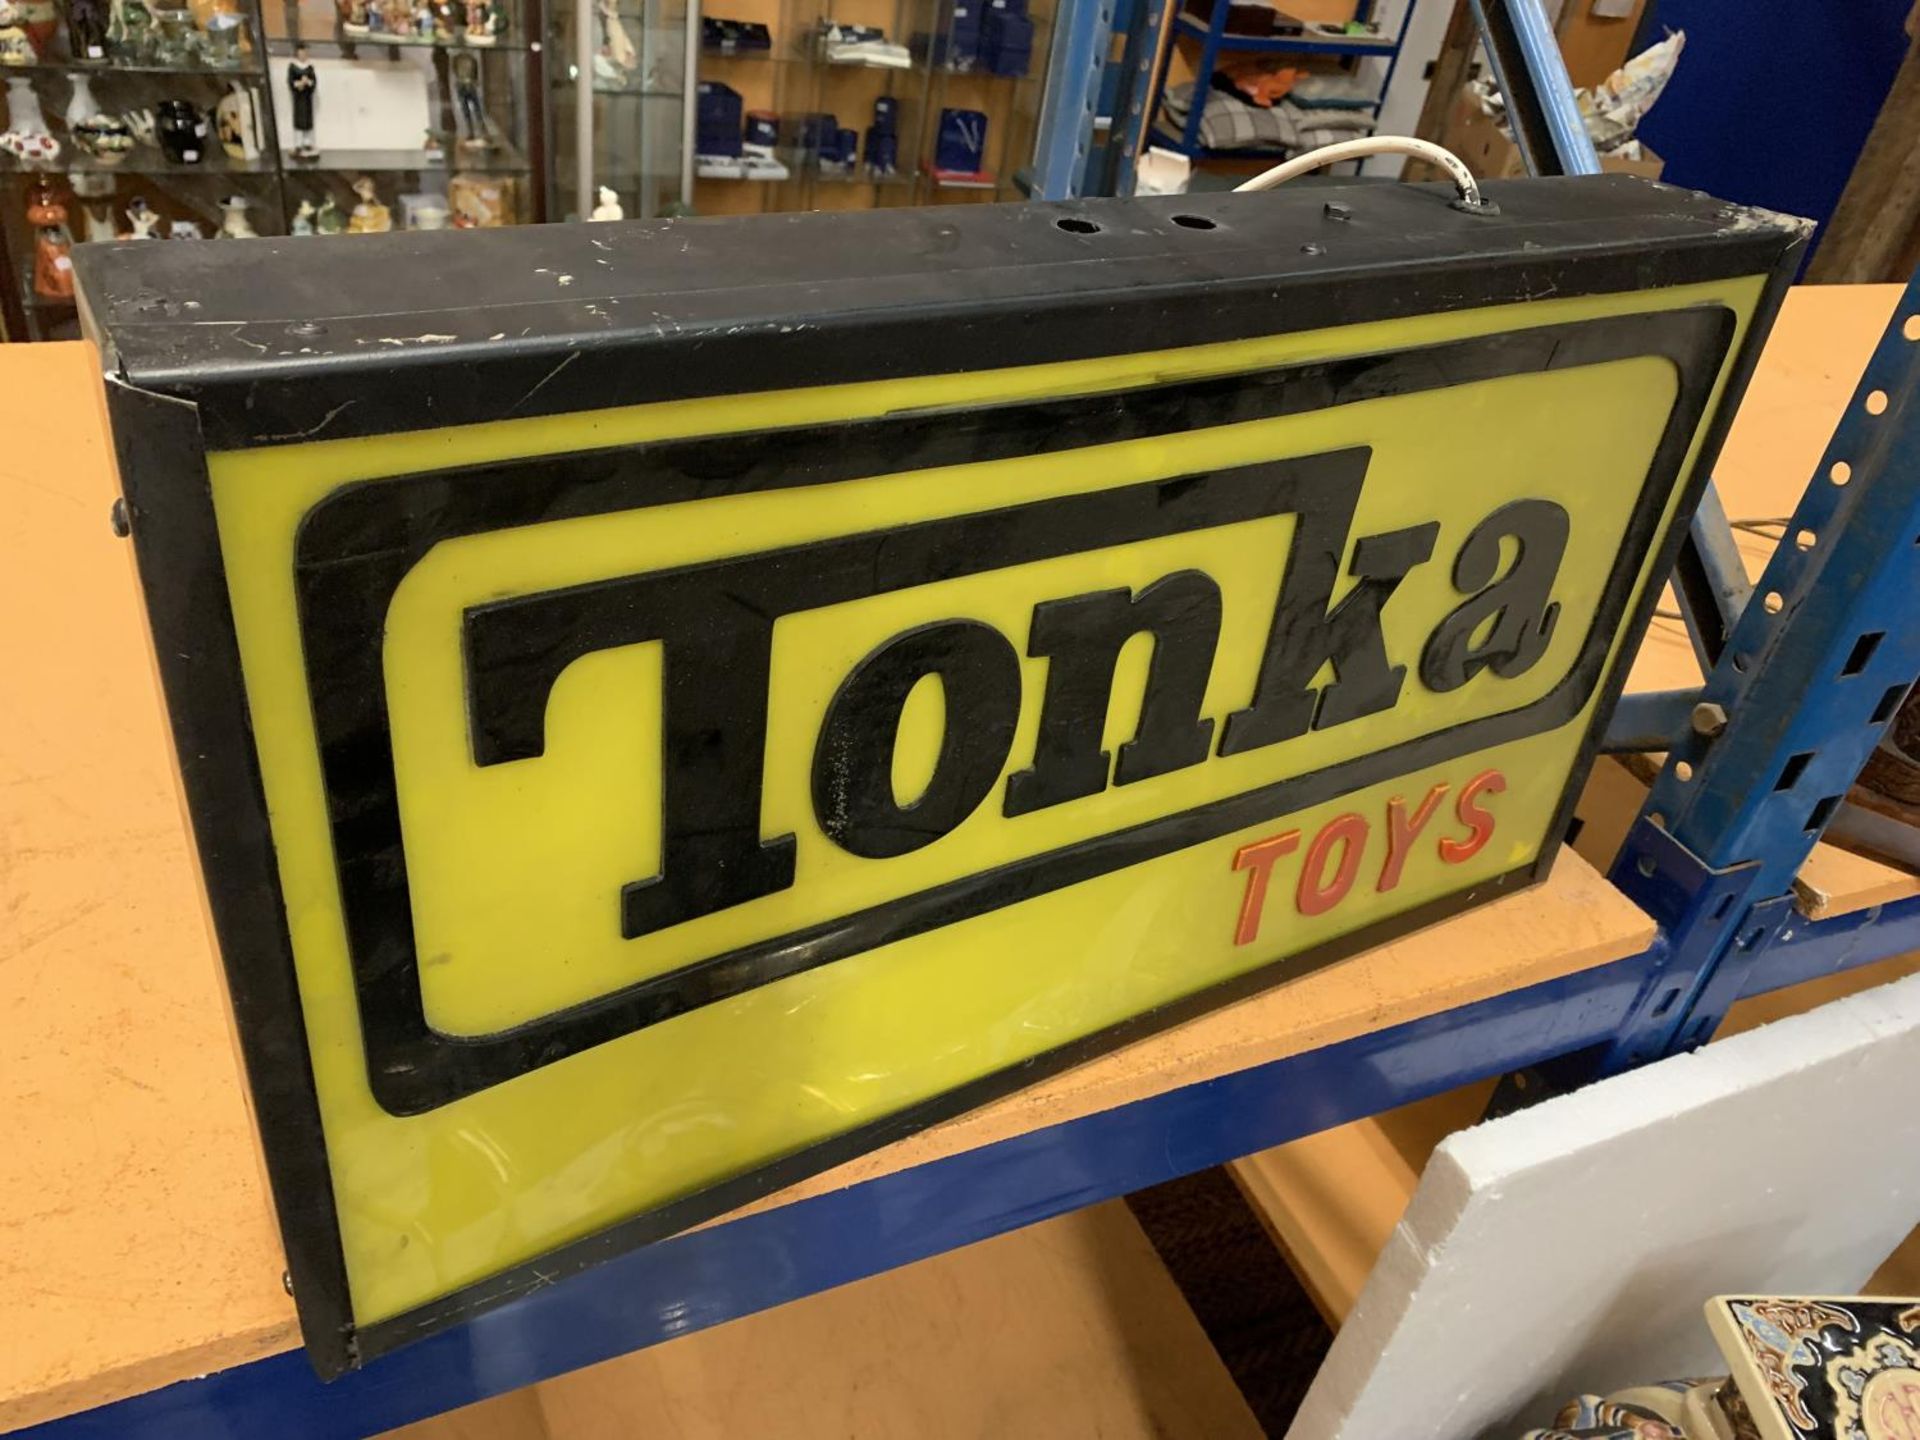 A TONKA TOYS ILLUMINATED LIGHT BOX SIGN - Image 2 of 3